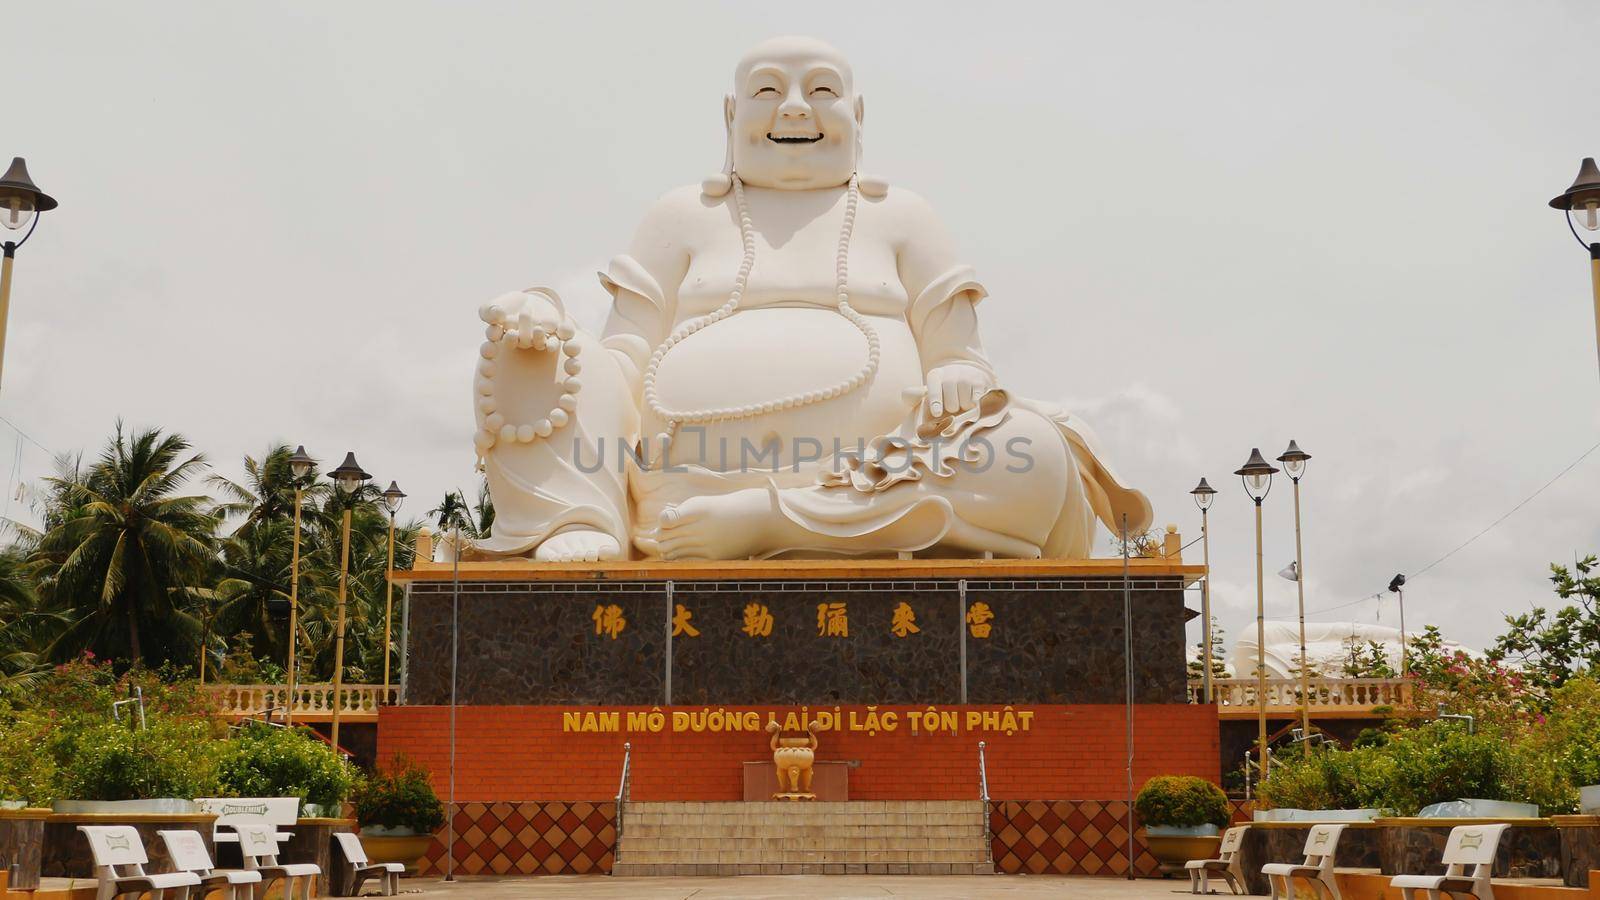 Statue of the Buddha. Temple of the Buddha. Vietnam